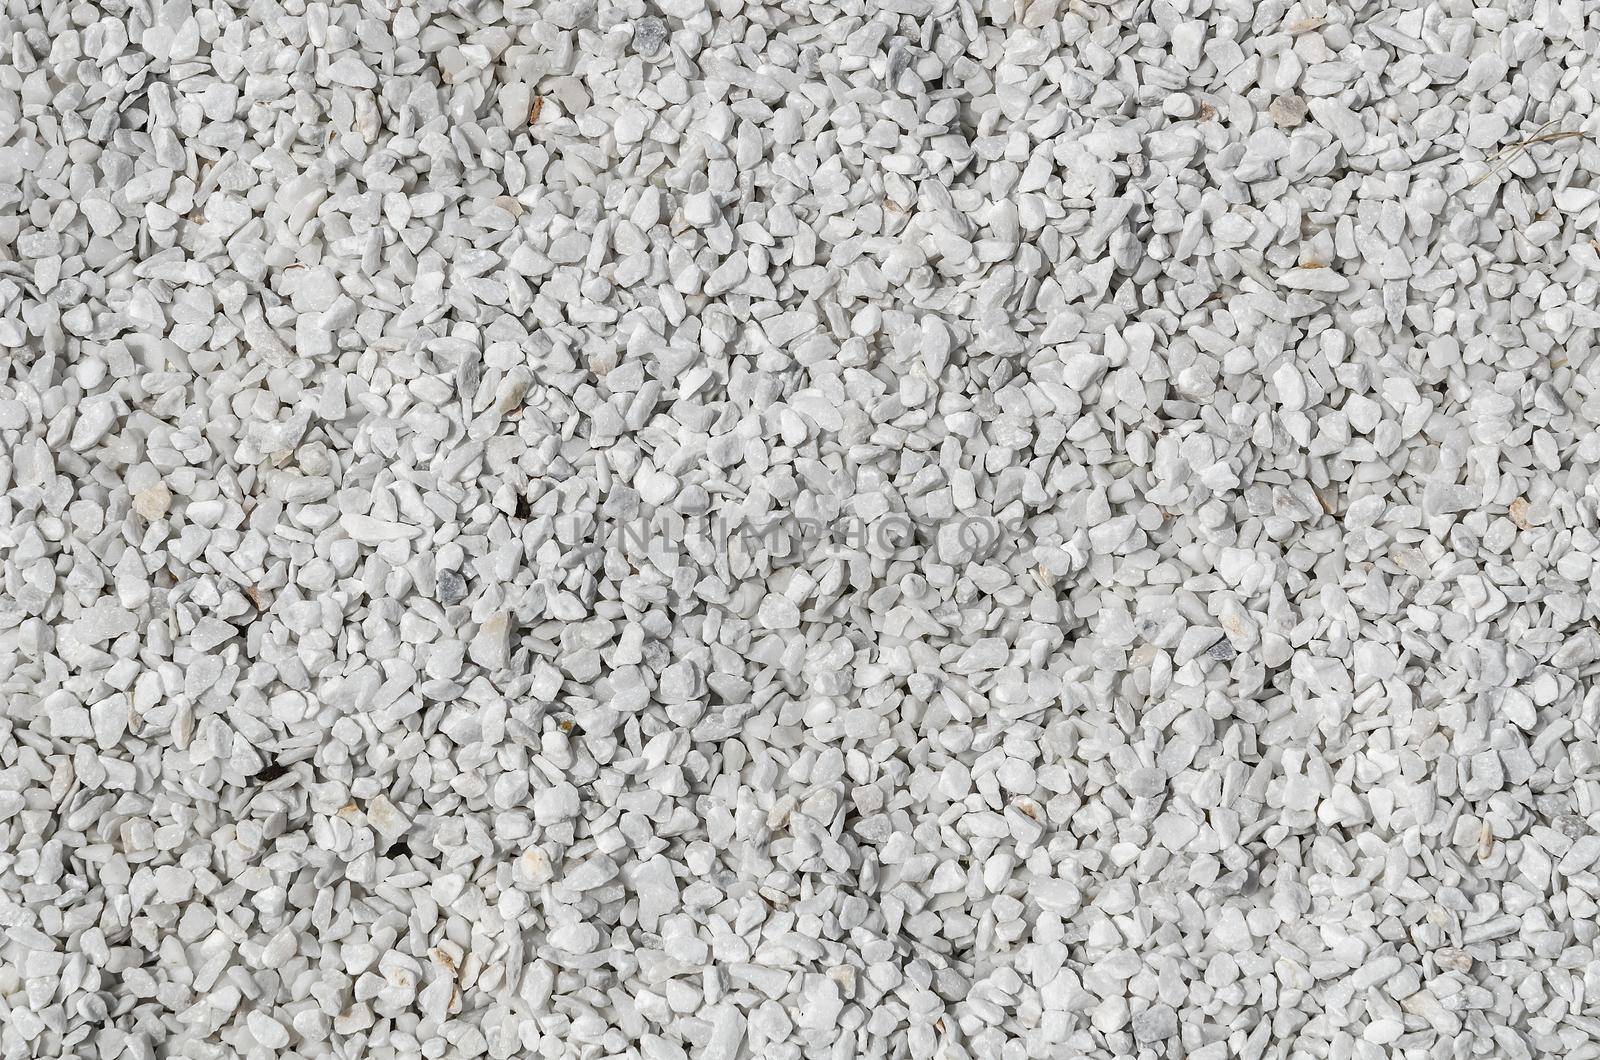 White stone gravel texture by cla78